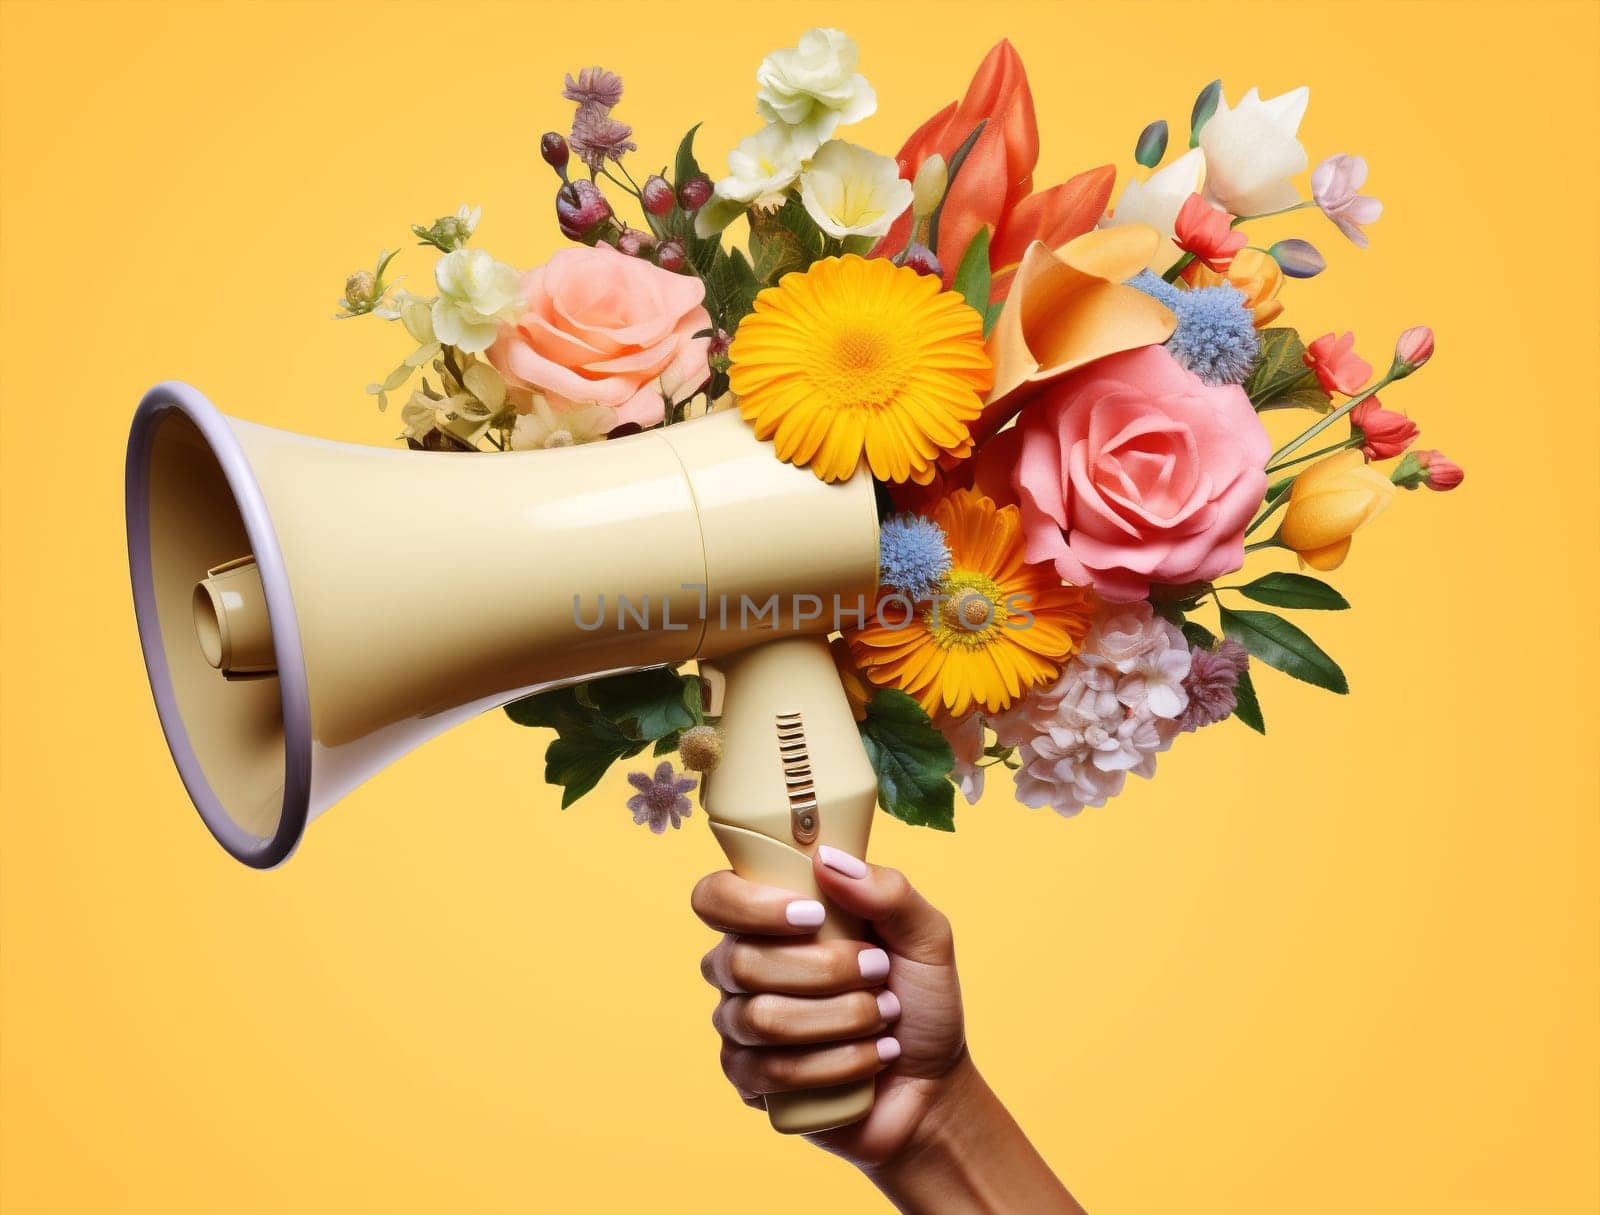 Flowers woman hand person day speech communication announce loudspeaker message loud megaphone yellow bullhorn by Vichizh